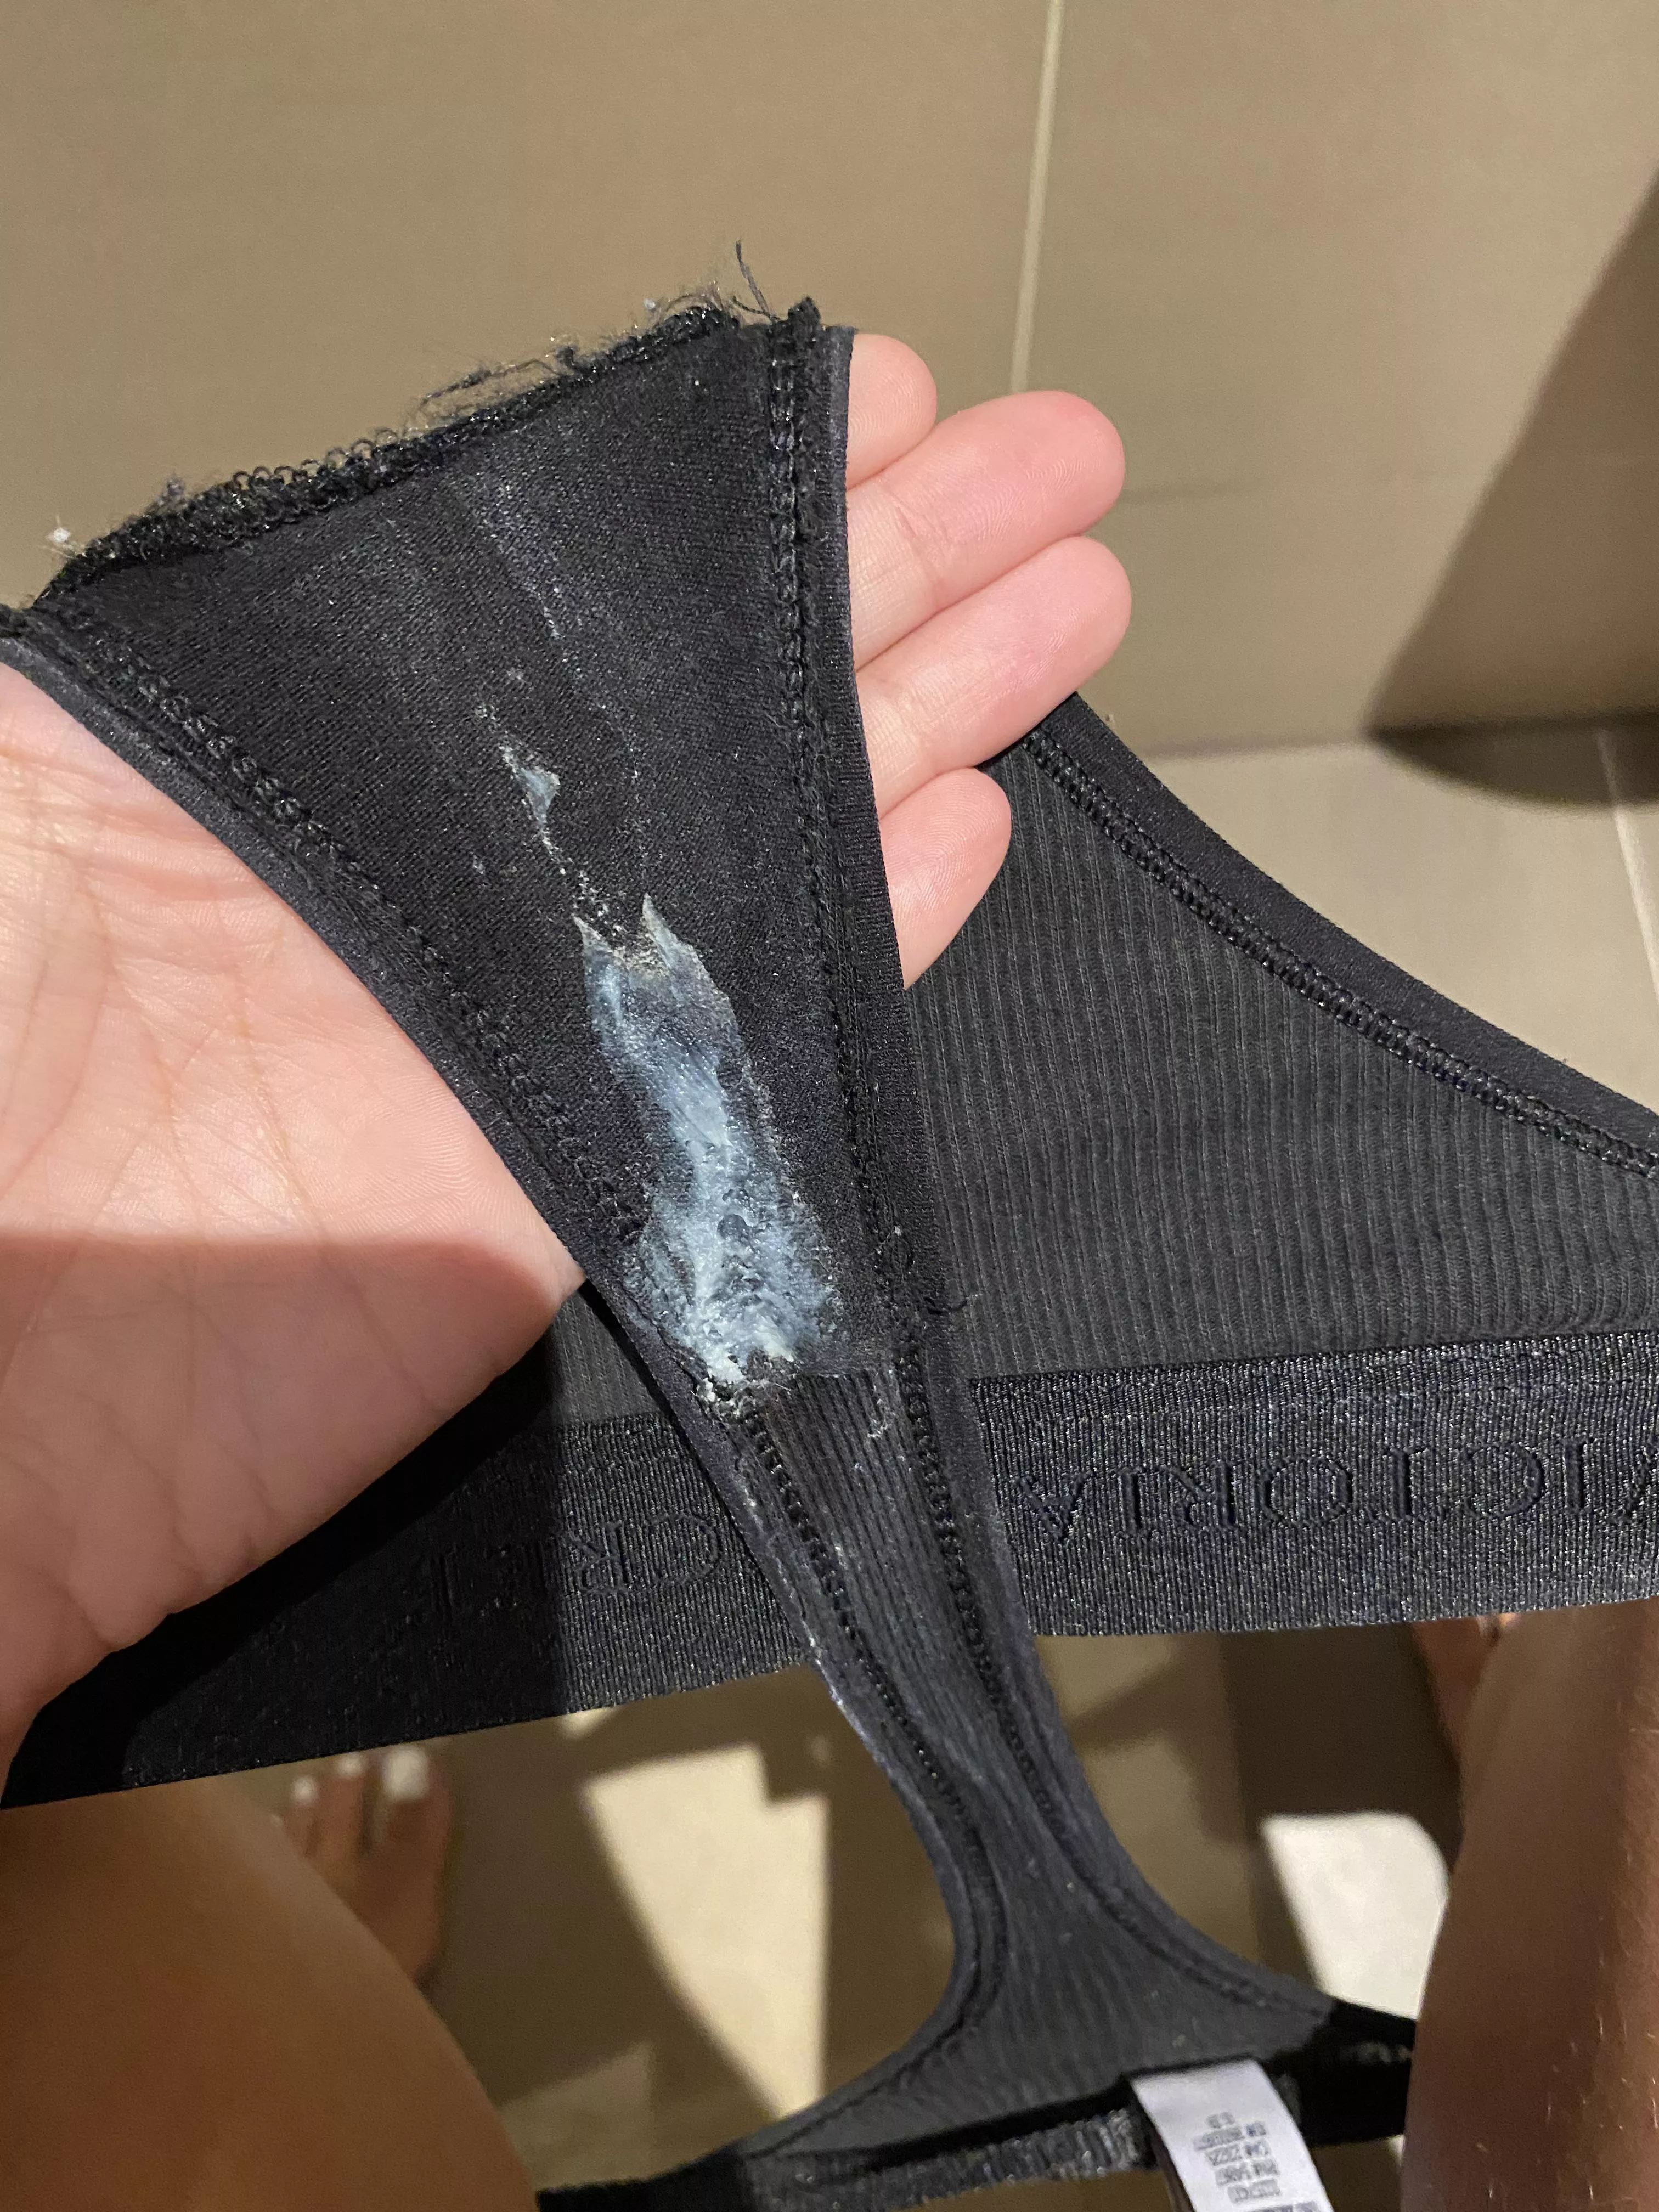 Panties On After Cum - Sweaty and creamy panties after today's gym session ðŸ˜‹ðŸ‘… I cum in them too  ðŸ’¦ nudes by klaudiaxxx